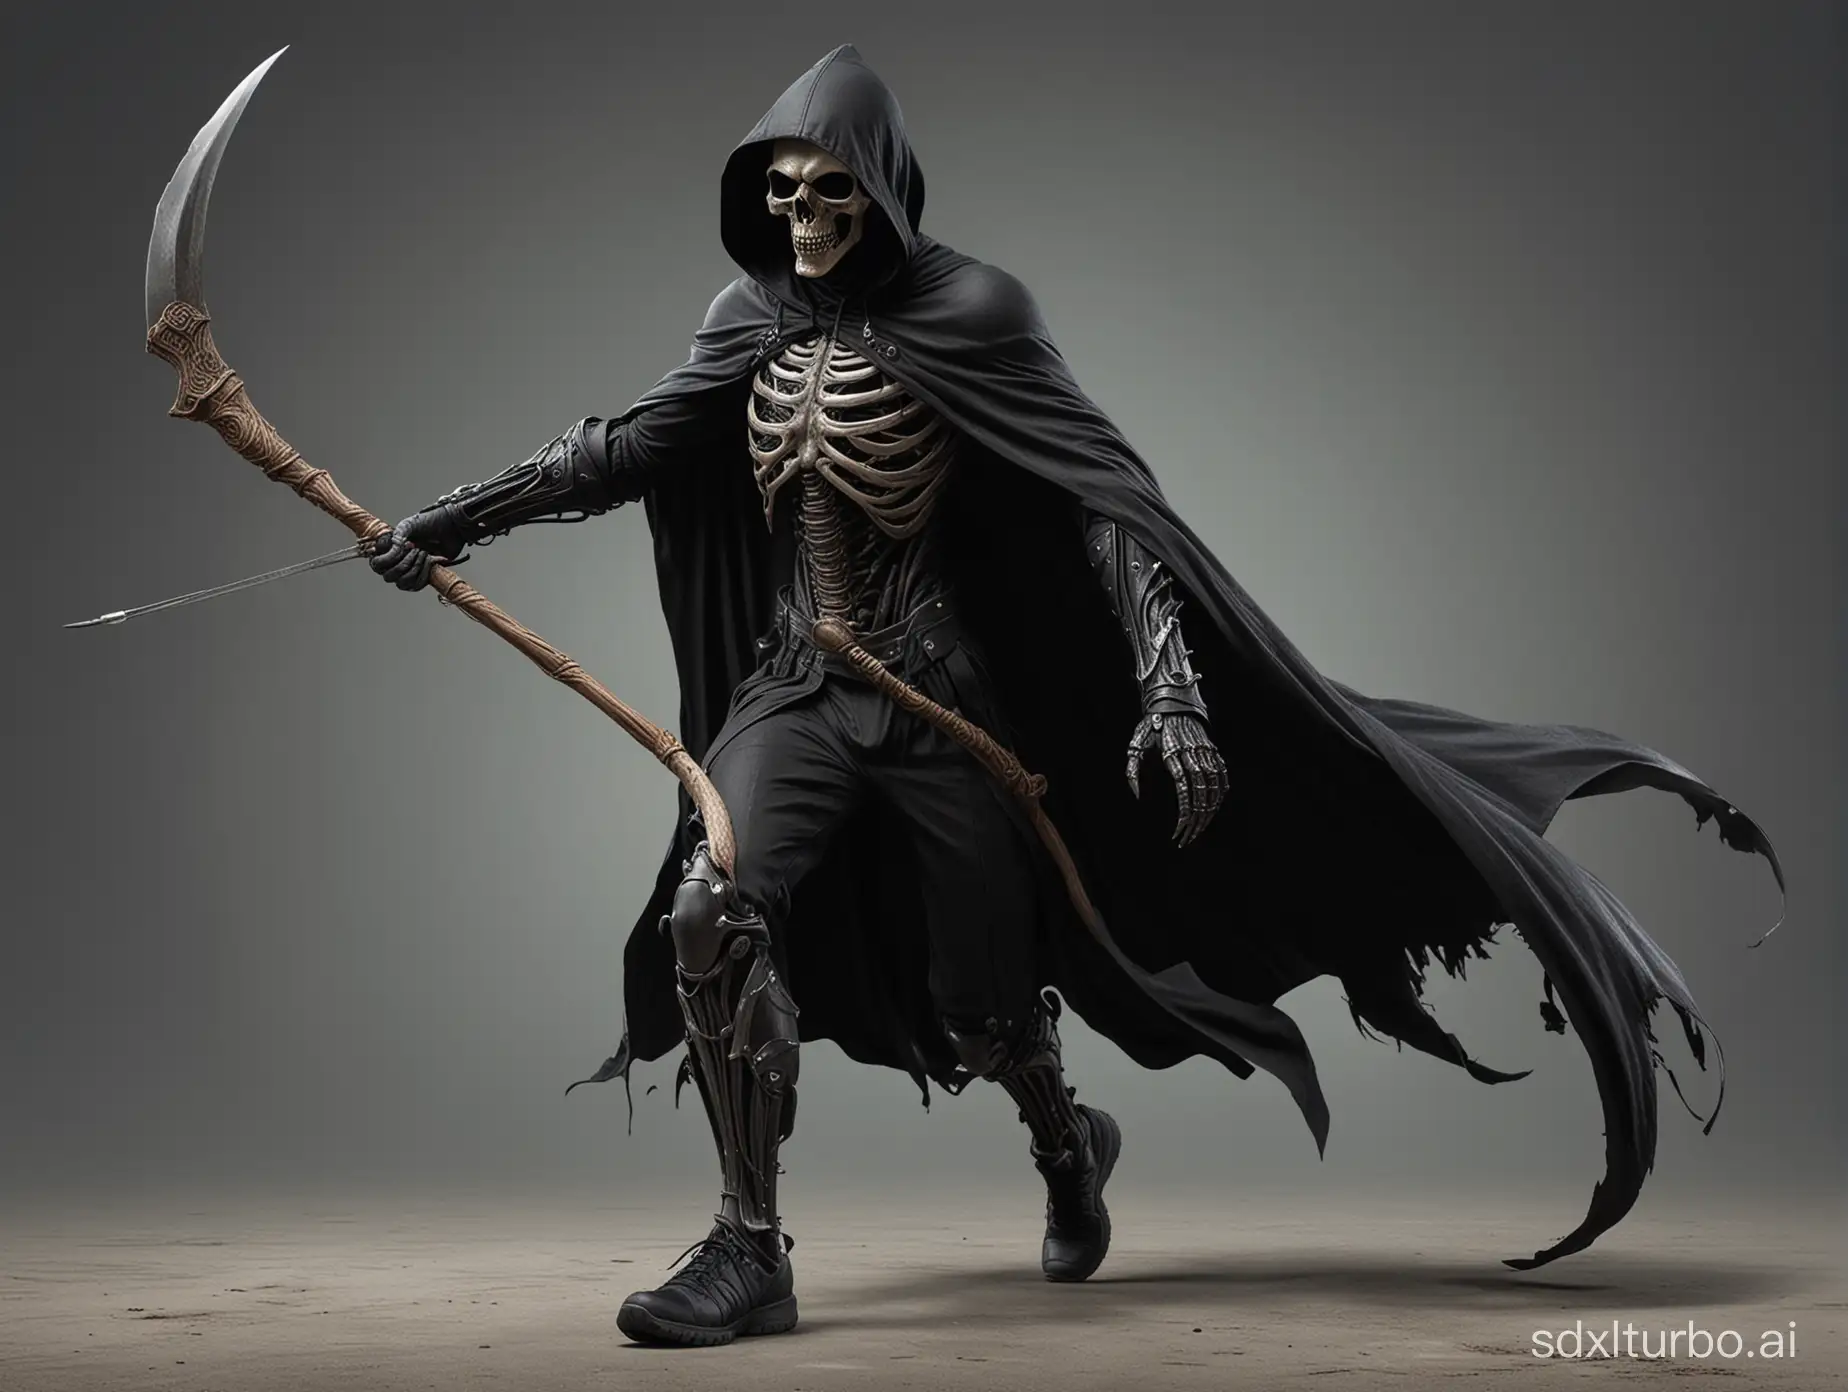 Grim-Reaper-Running-with-Scythe-Realistic-Skeleton-in-Black-Attire